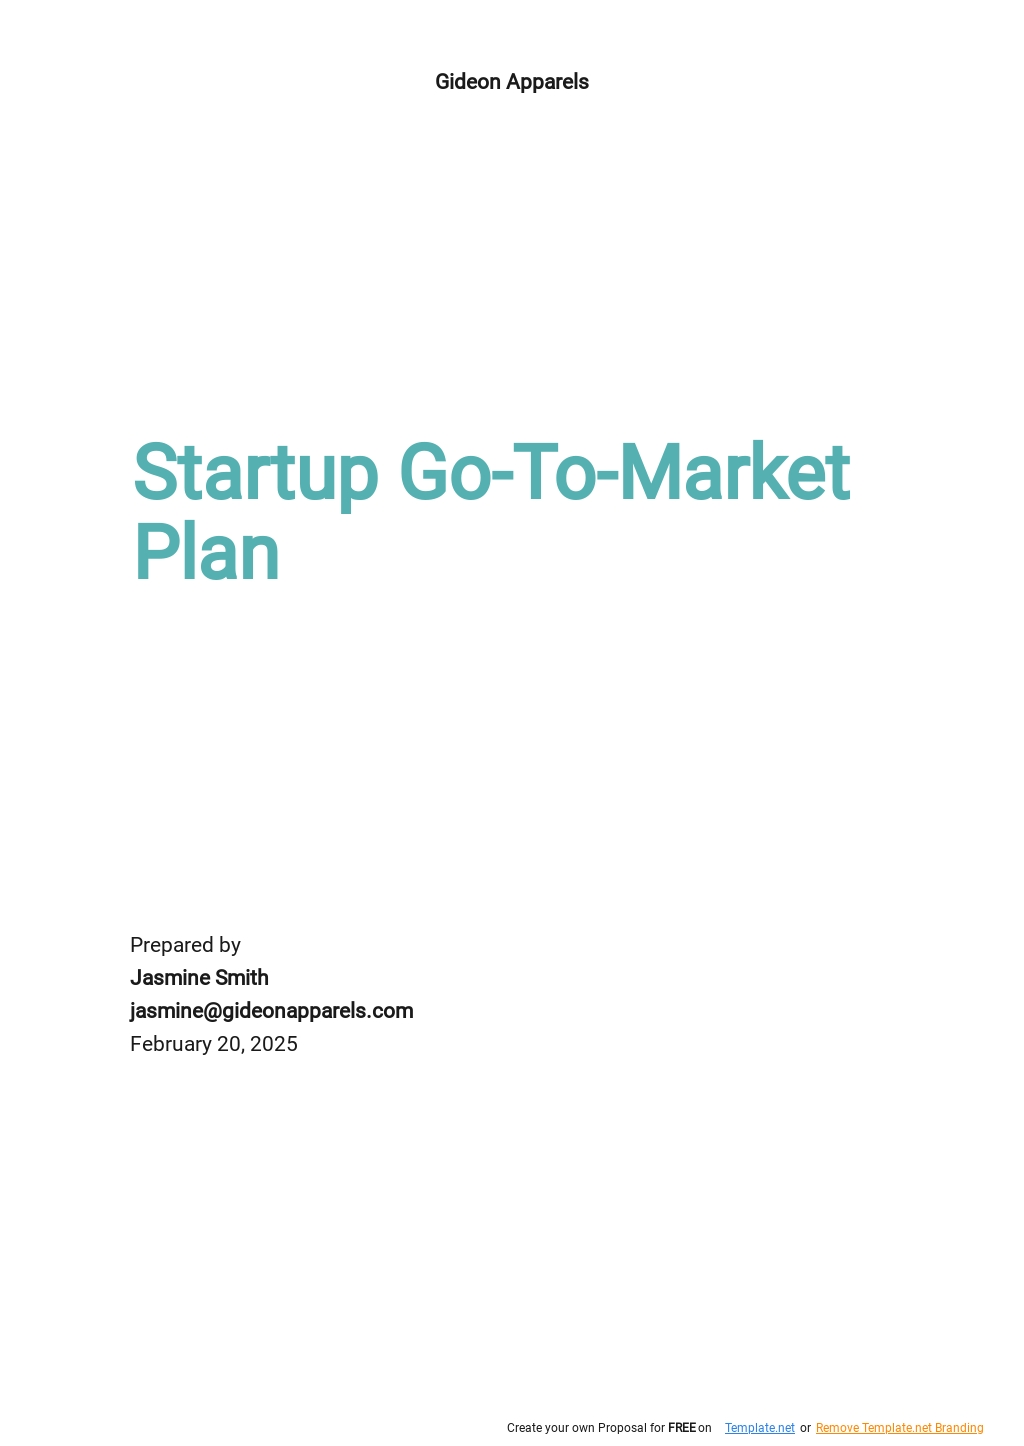 Startup Go To Market Plan Template.jpe